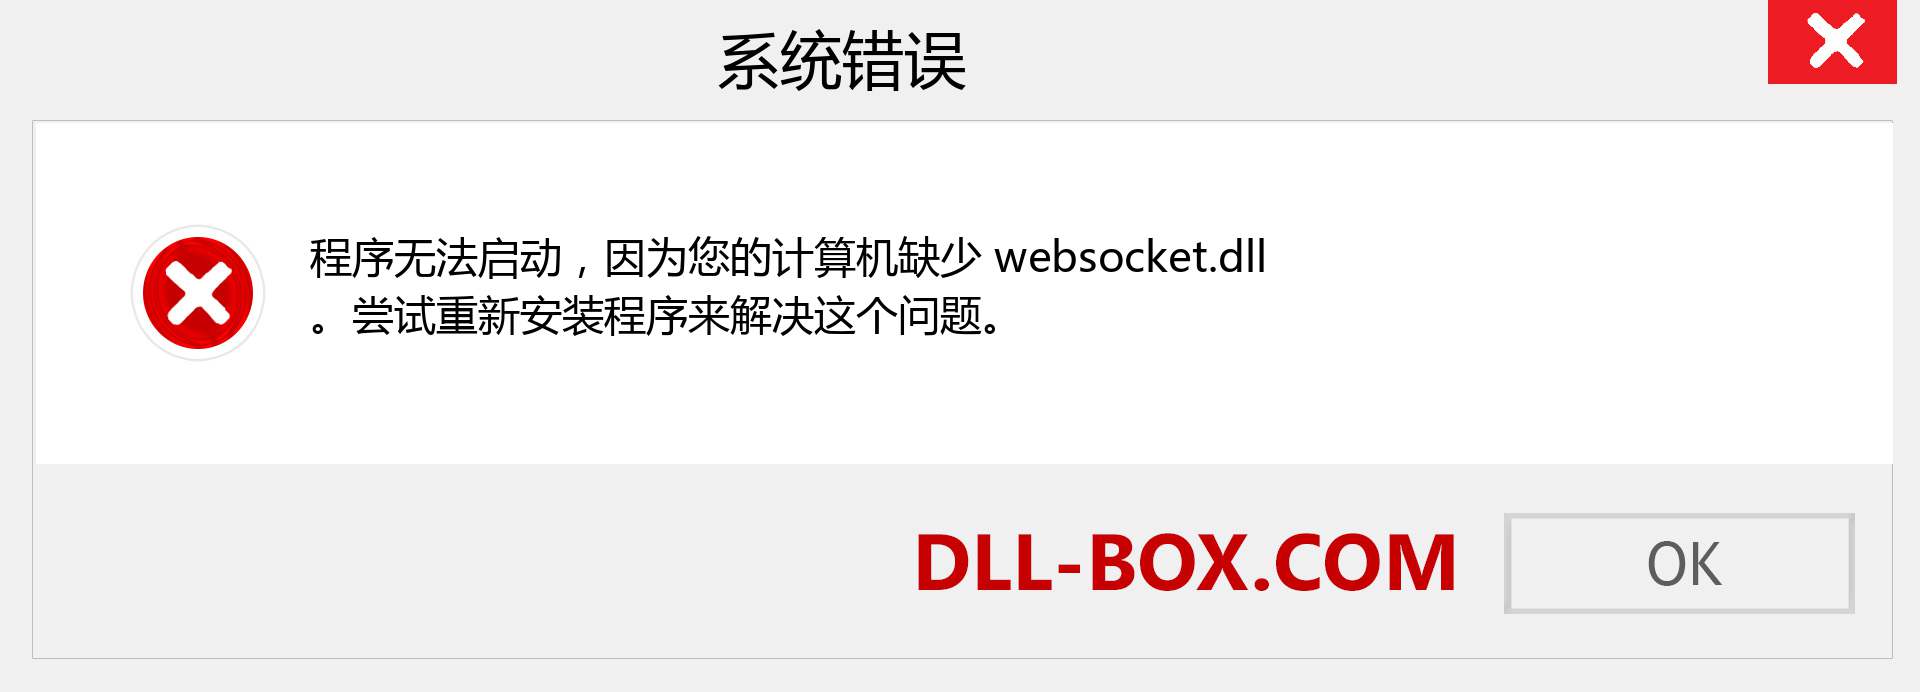 websocket.dll 文件丢失？。 适用于 Windows 7、8、10 的下载 - 修复 Windows、照片、图像上的 websocket dll 丢失错误